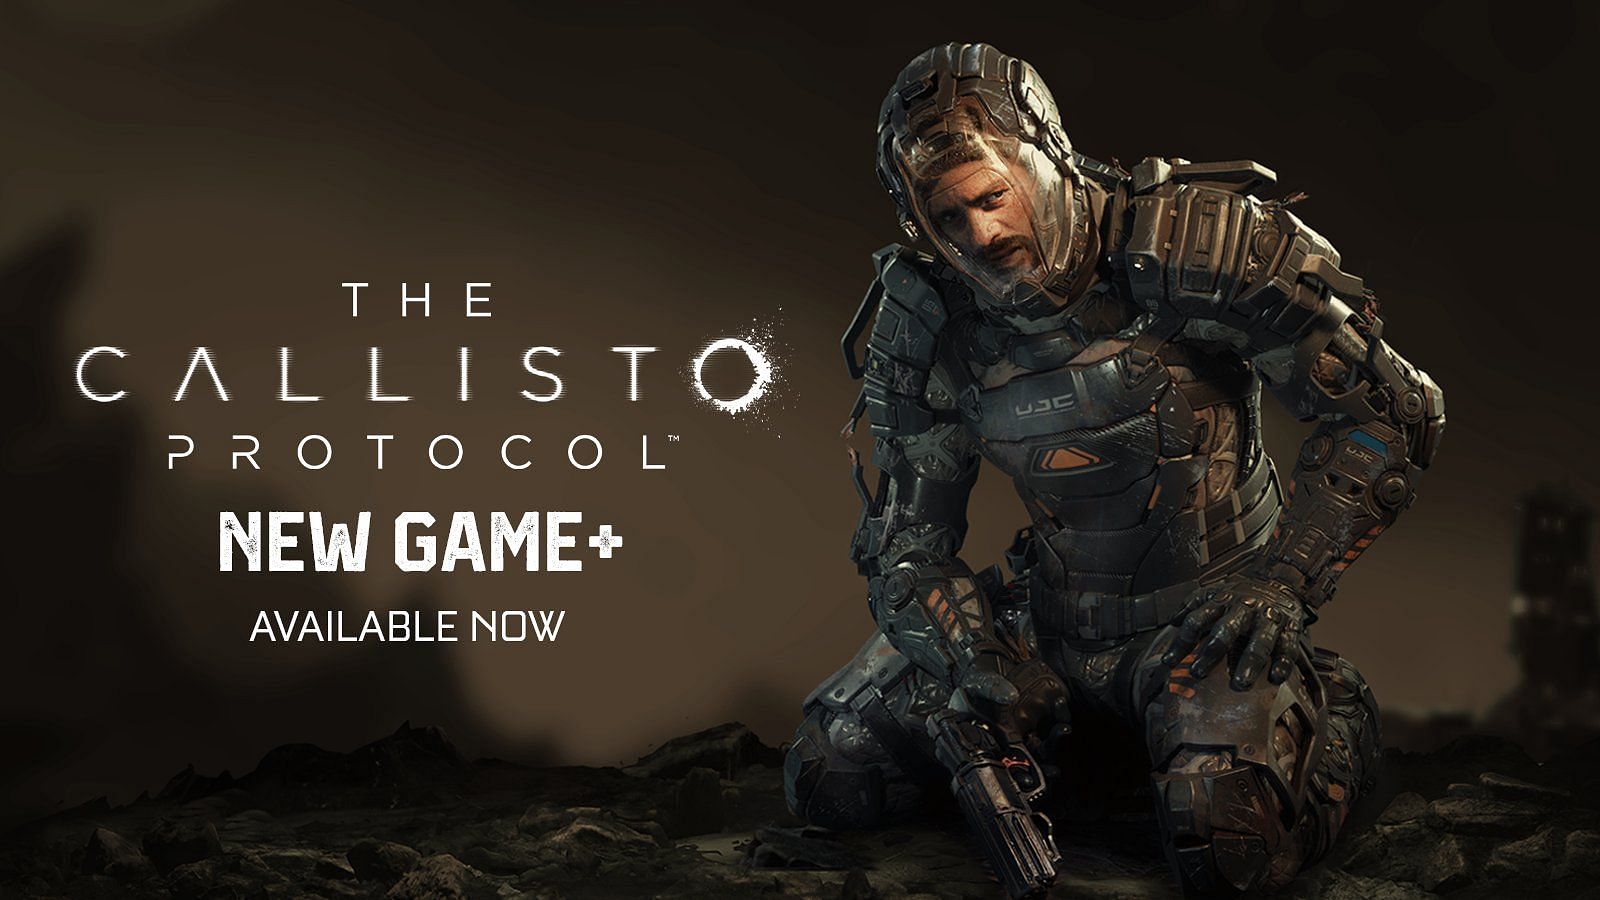 The Calistro Protocol gets New Game + (Image via Calistro Protocol)